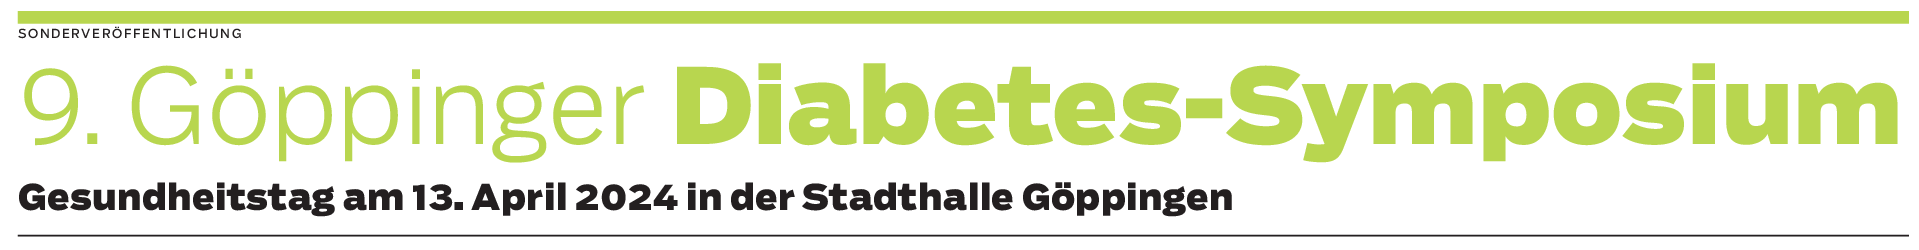 Diabetes-Symposium in Göppingen: Neue Wege im Umgang mit Diabetes